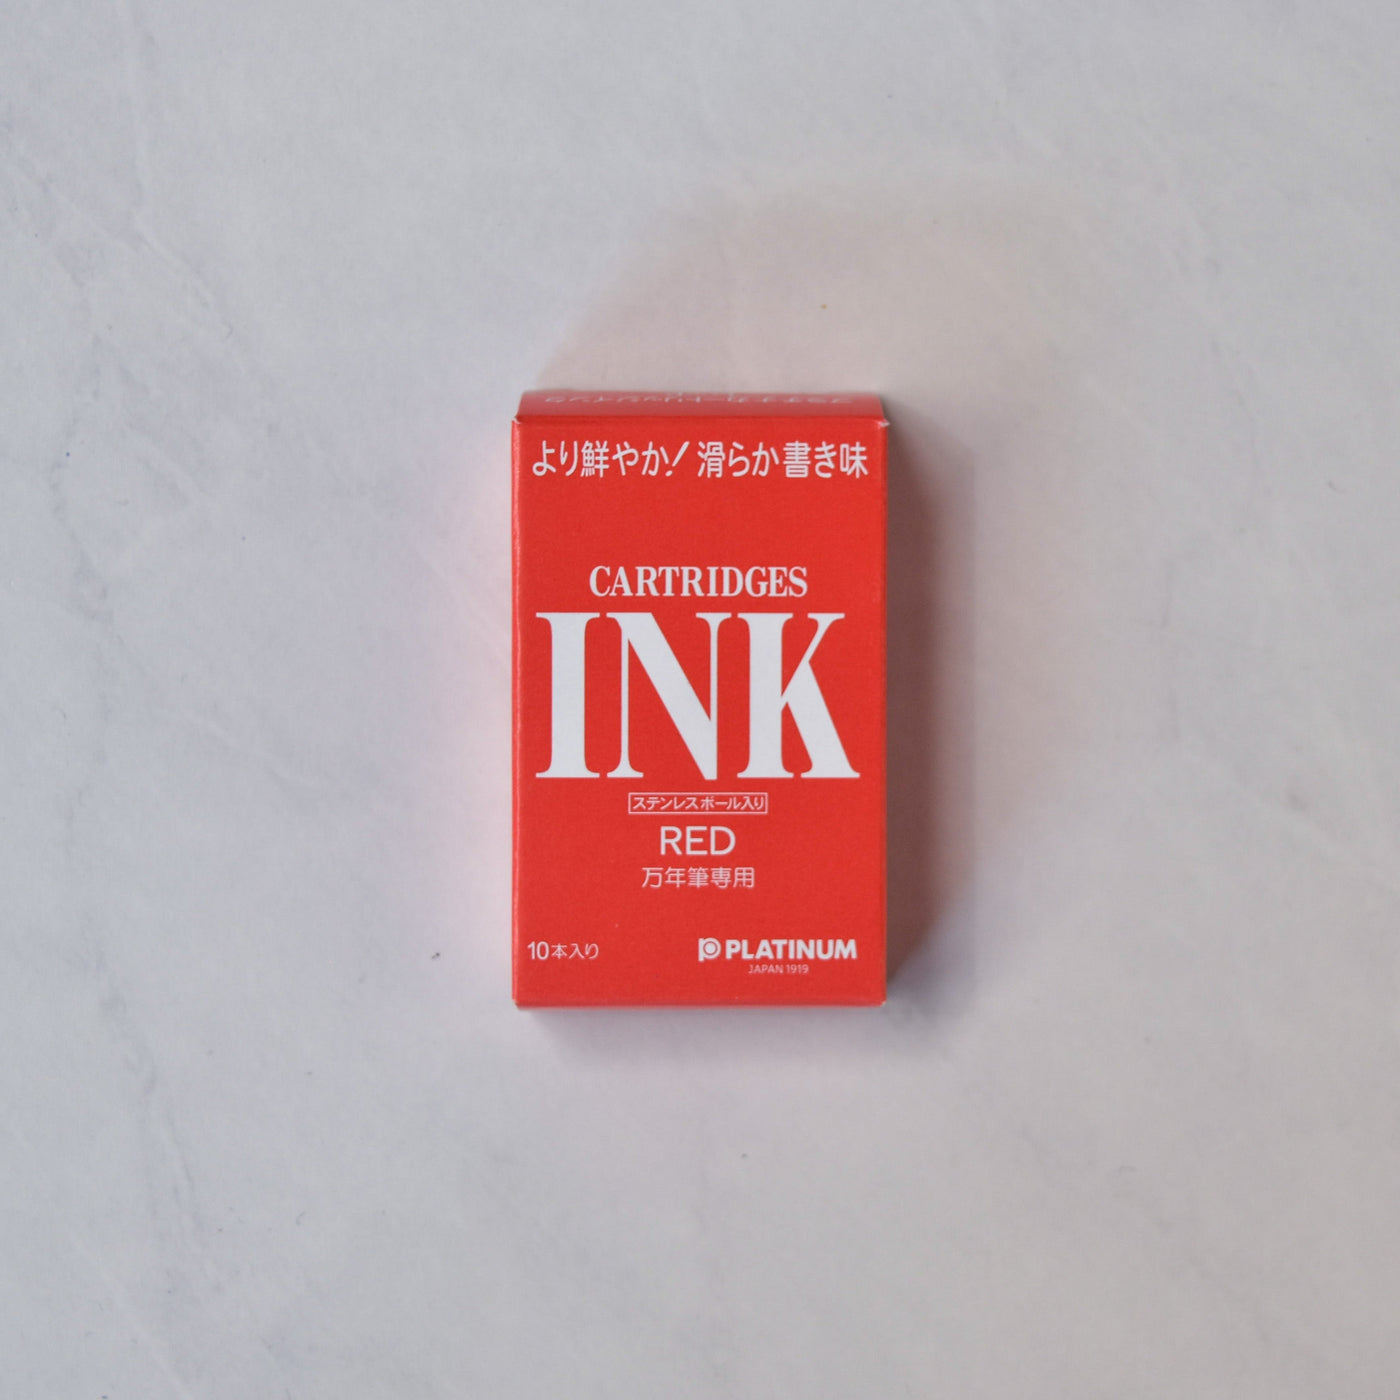 Platinum Red Ink Cartridges - Pack of 10